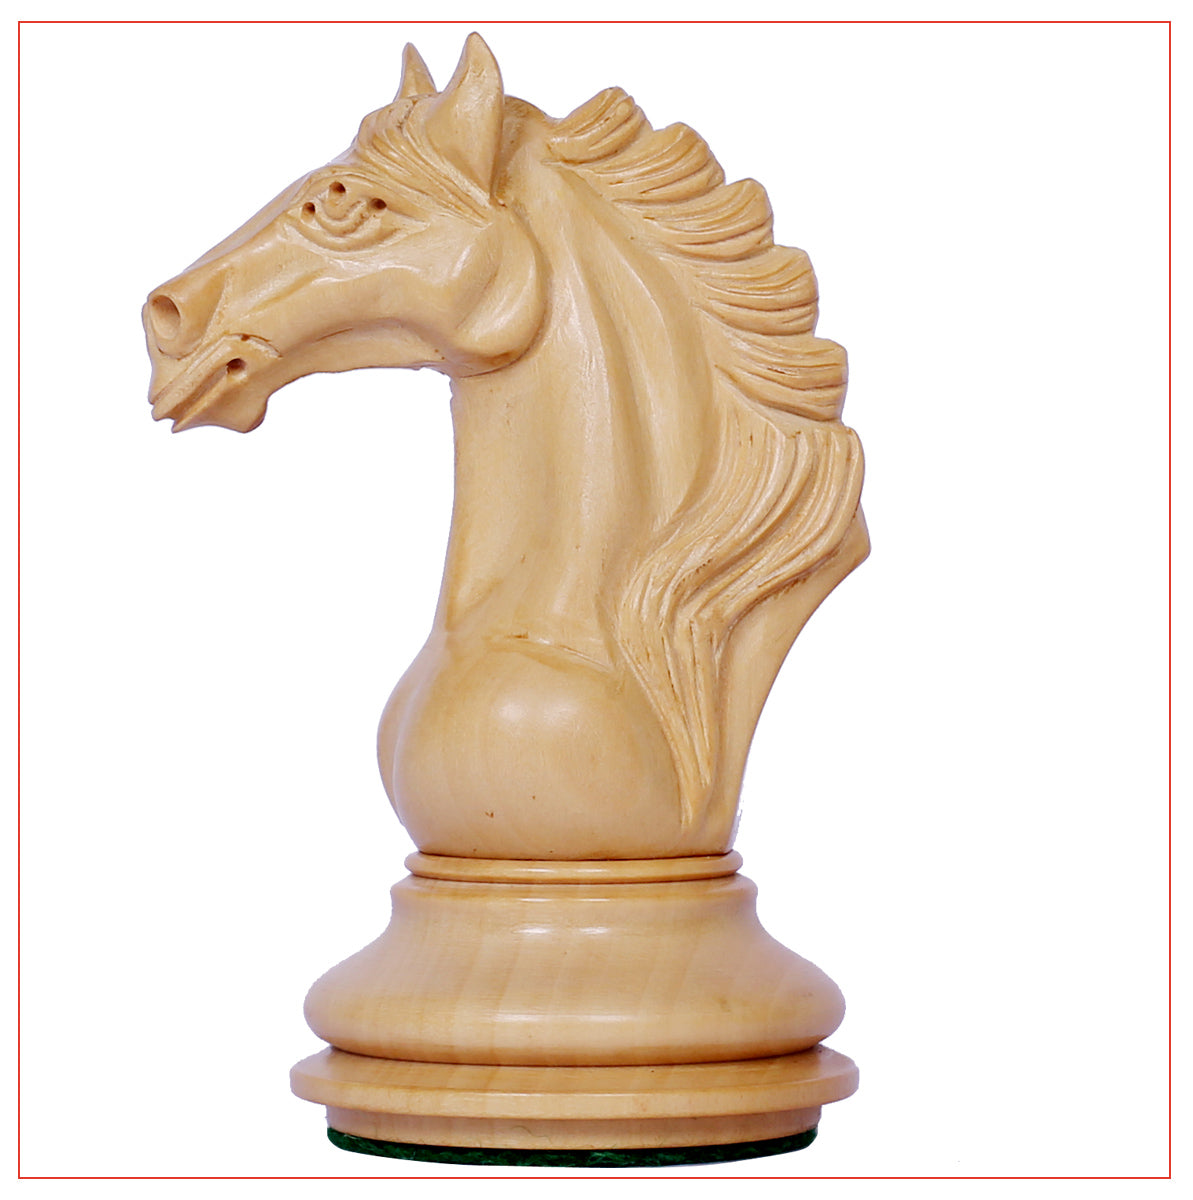 Mecadon Series 4.4" Ebony Wood Staunton Chess Set